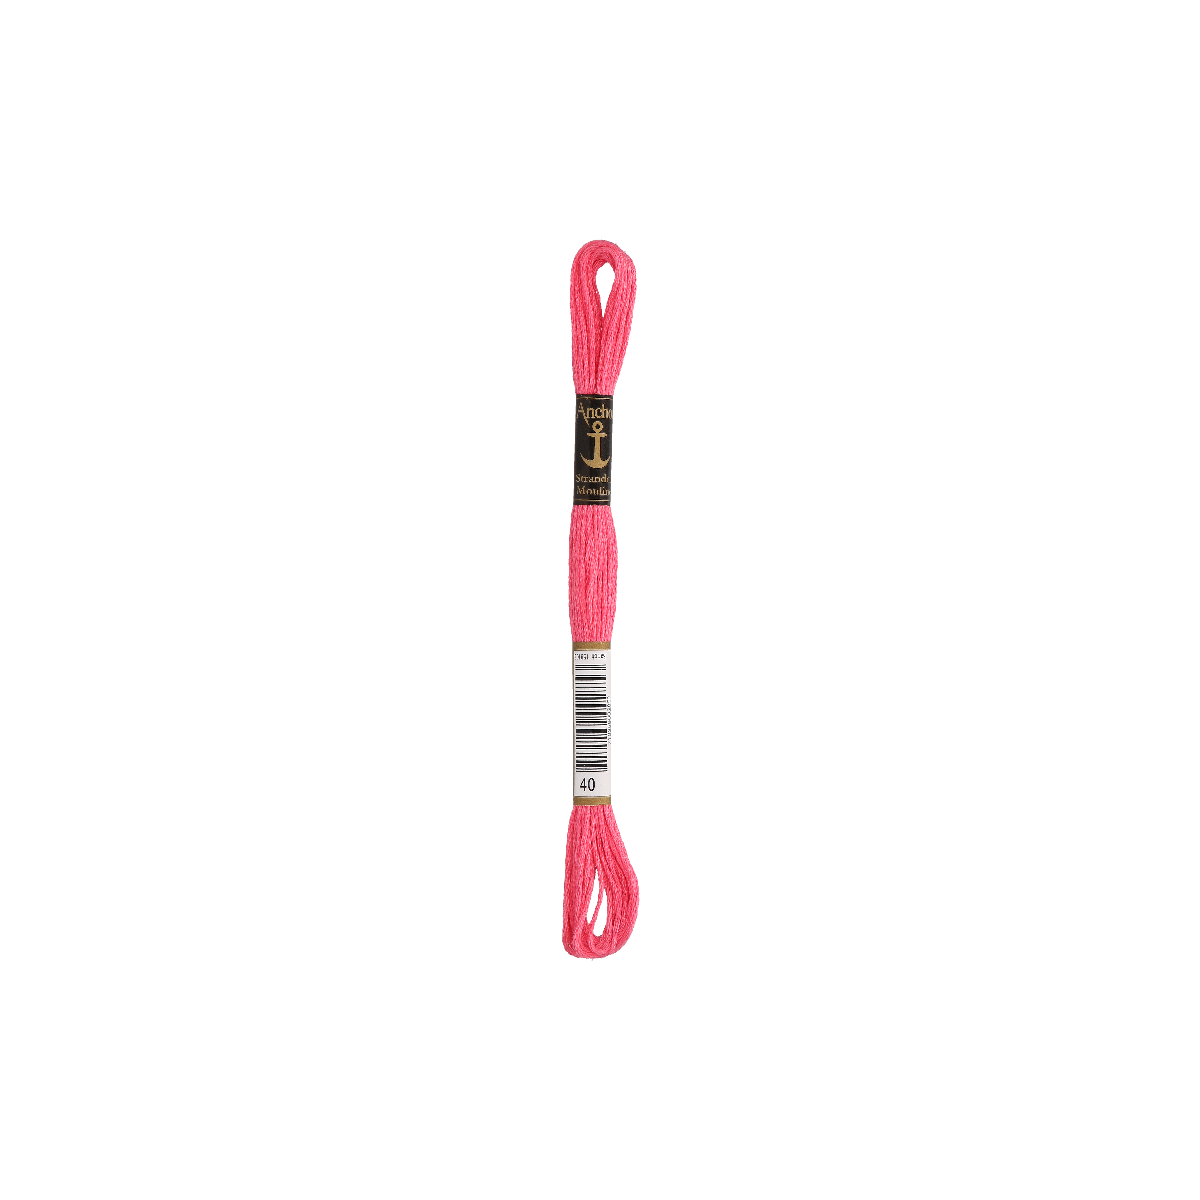 Anchor Sticktwist 8m, luz rosa, algodón, color 40,...